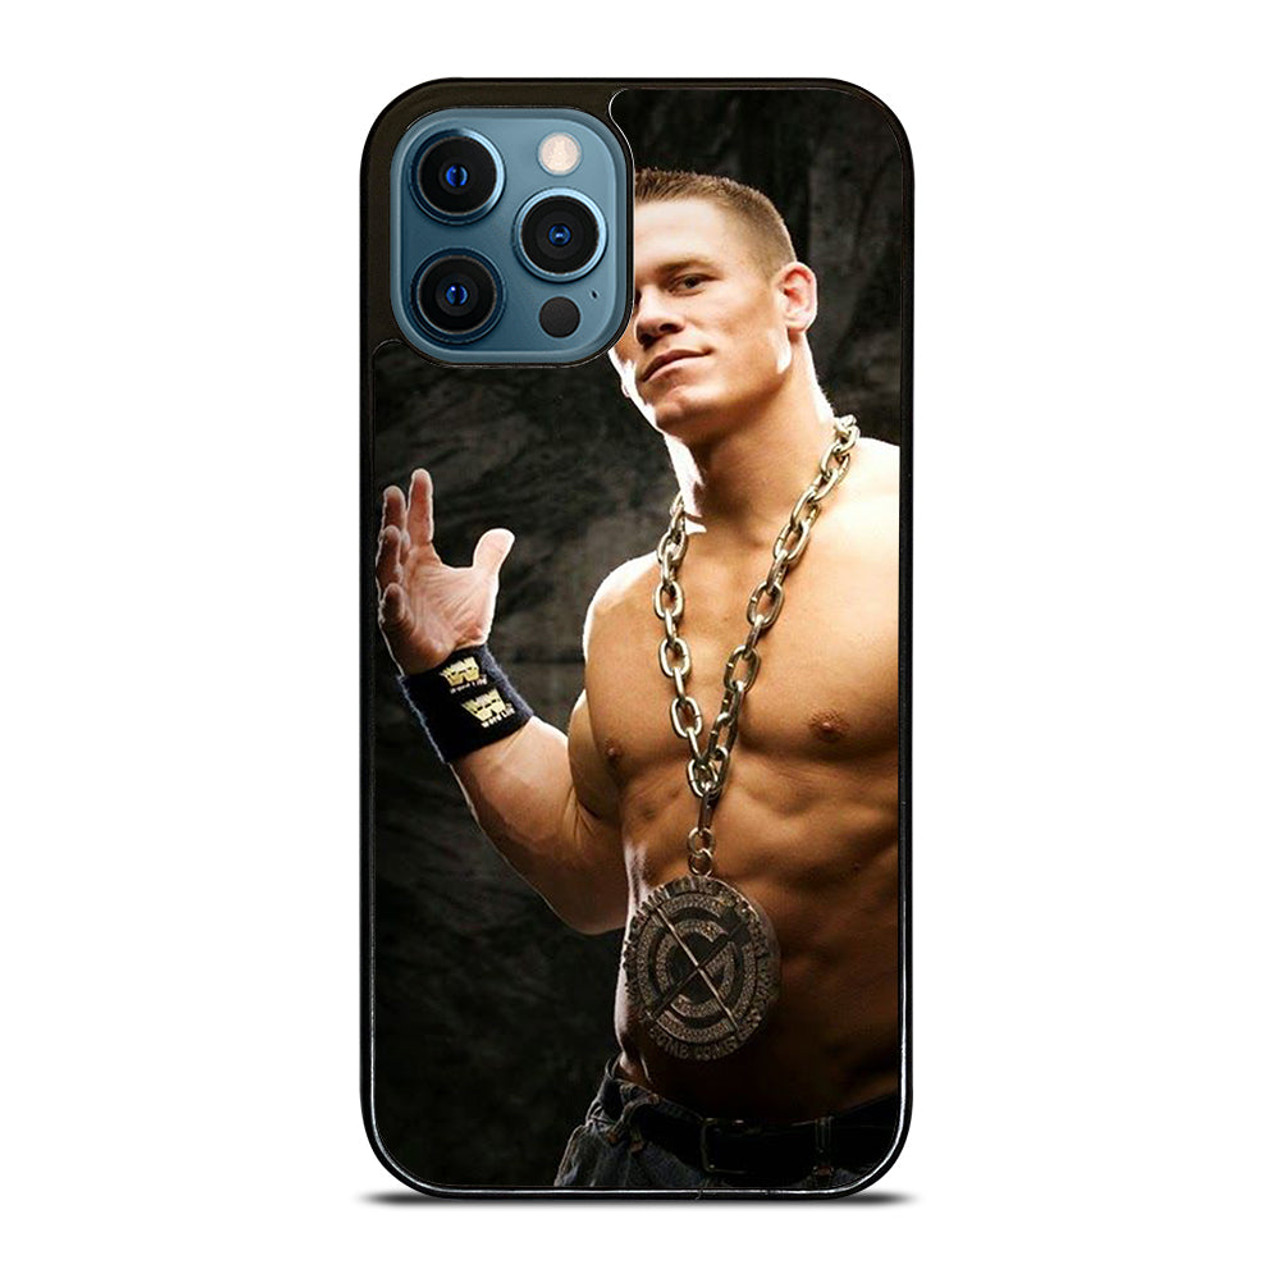 JOHN CENA WWE CHAMPION 4 iPhone 12 Pro Max Case